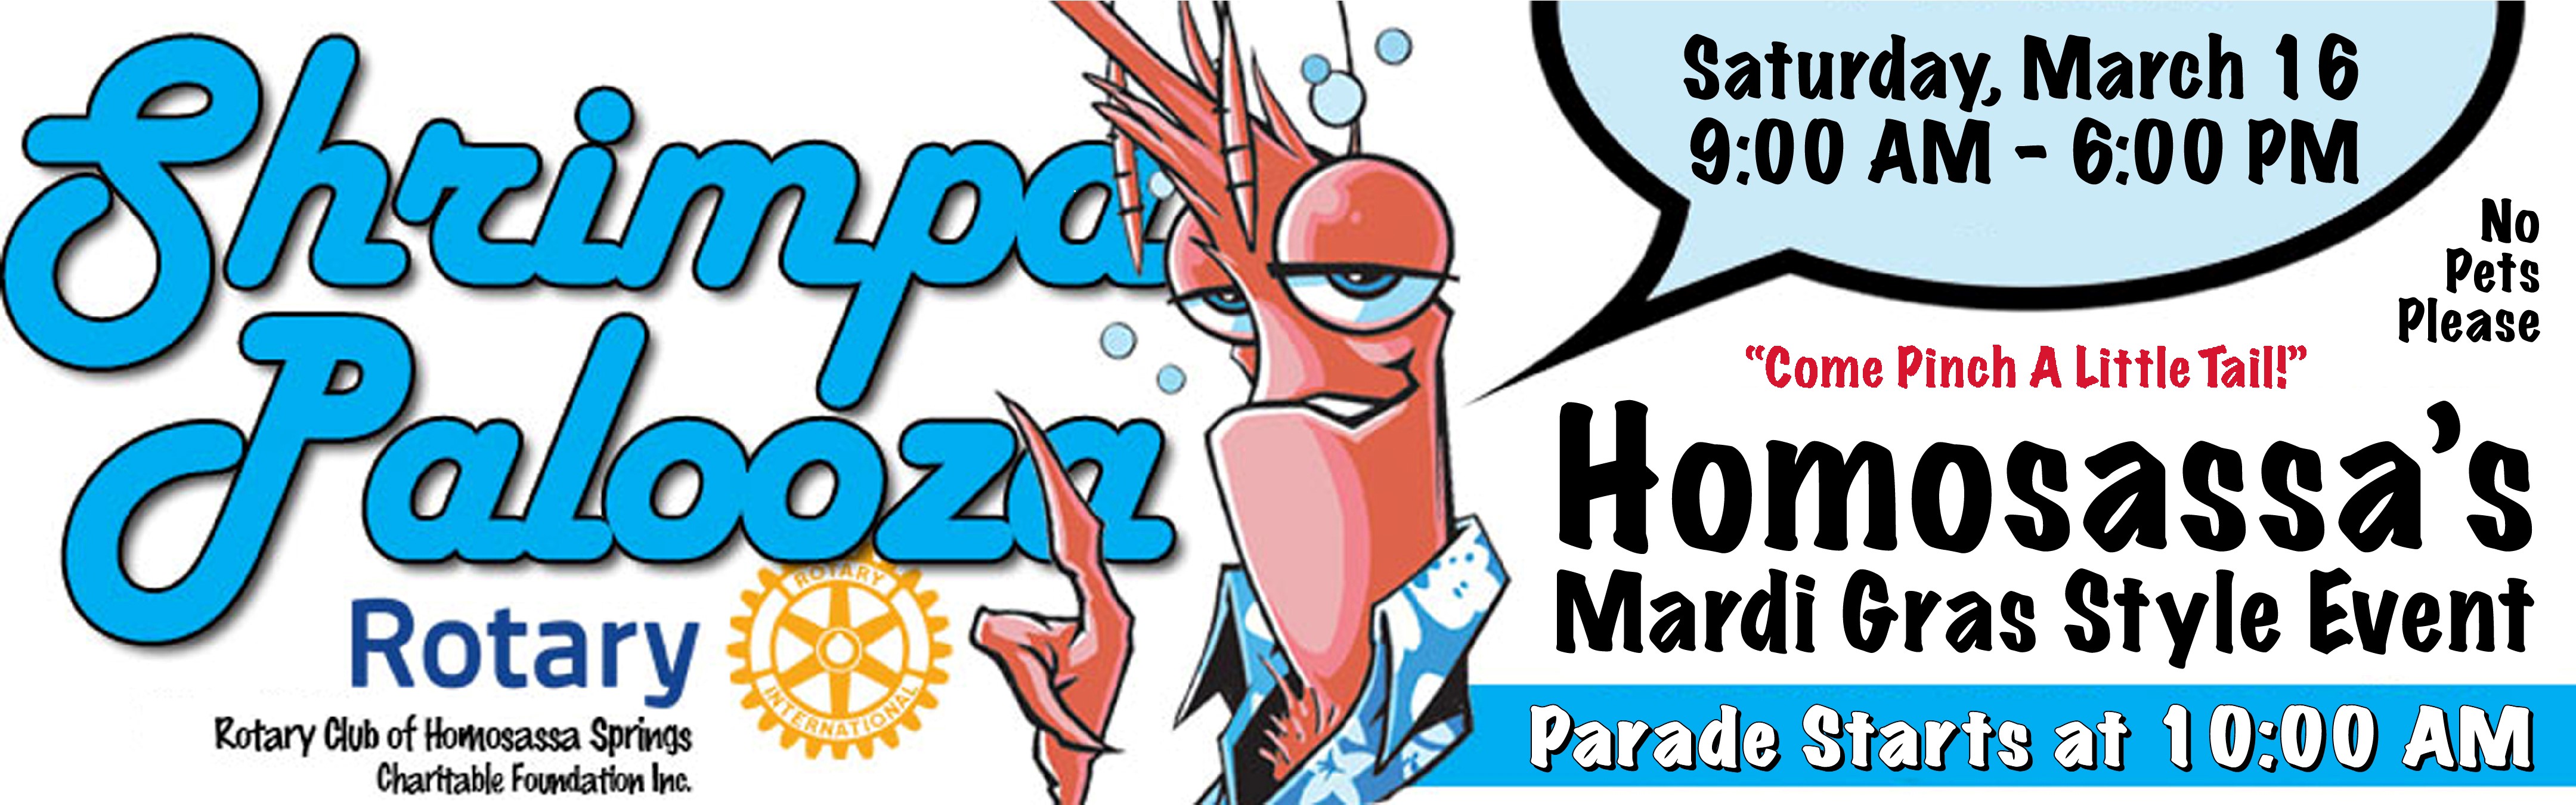 Shrimpa Palooza 2019